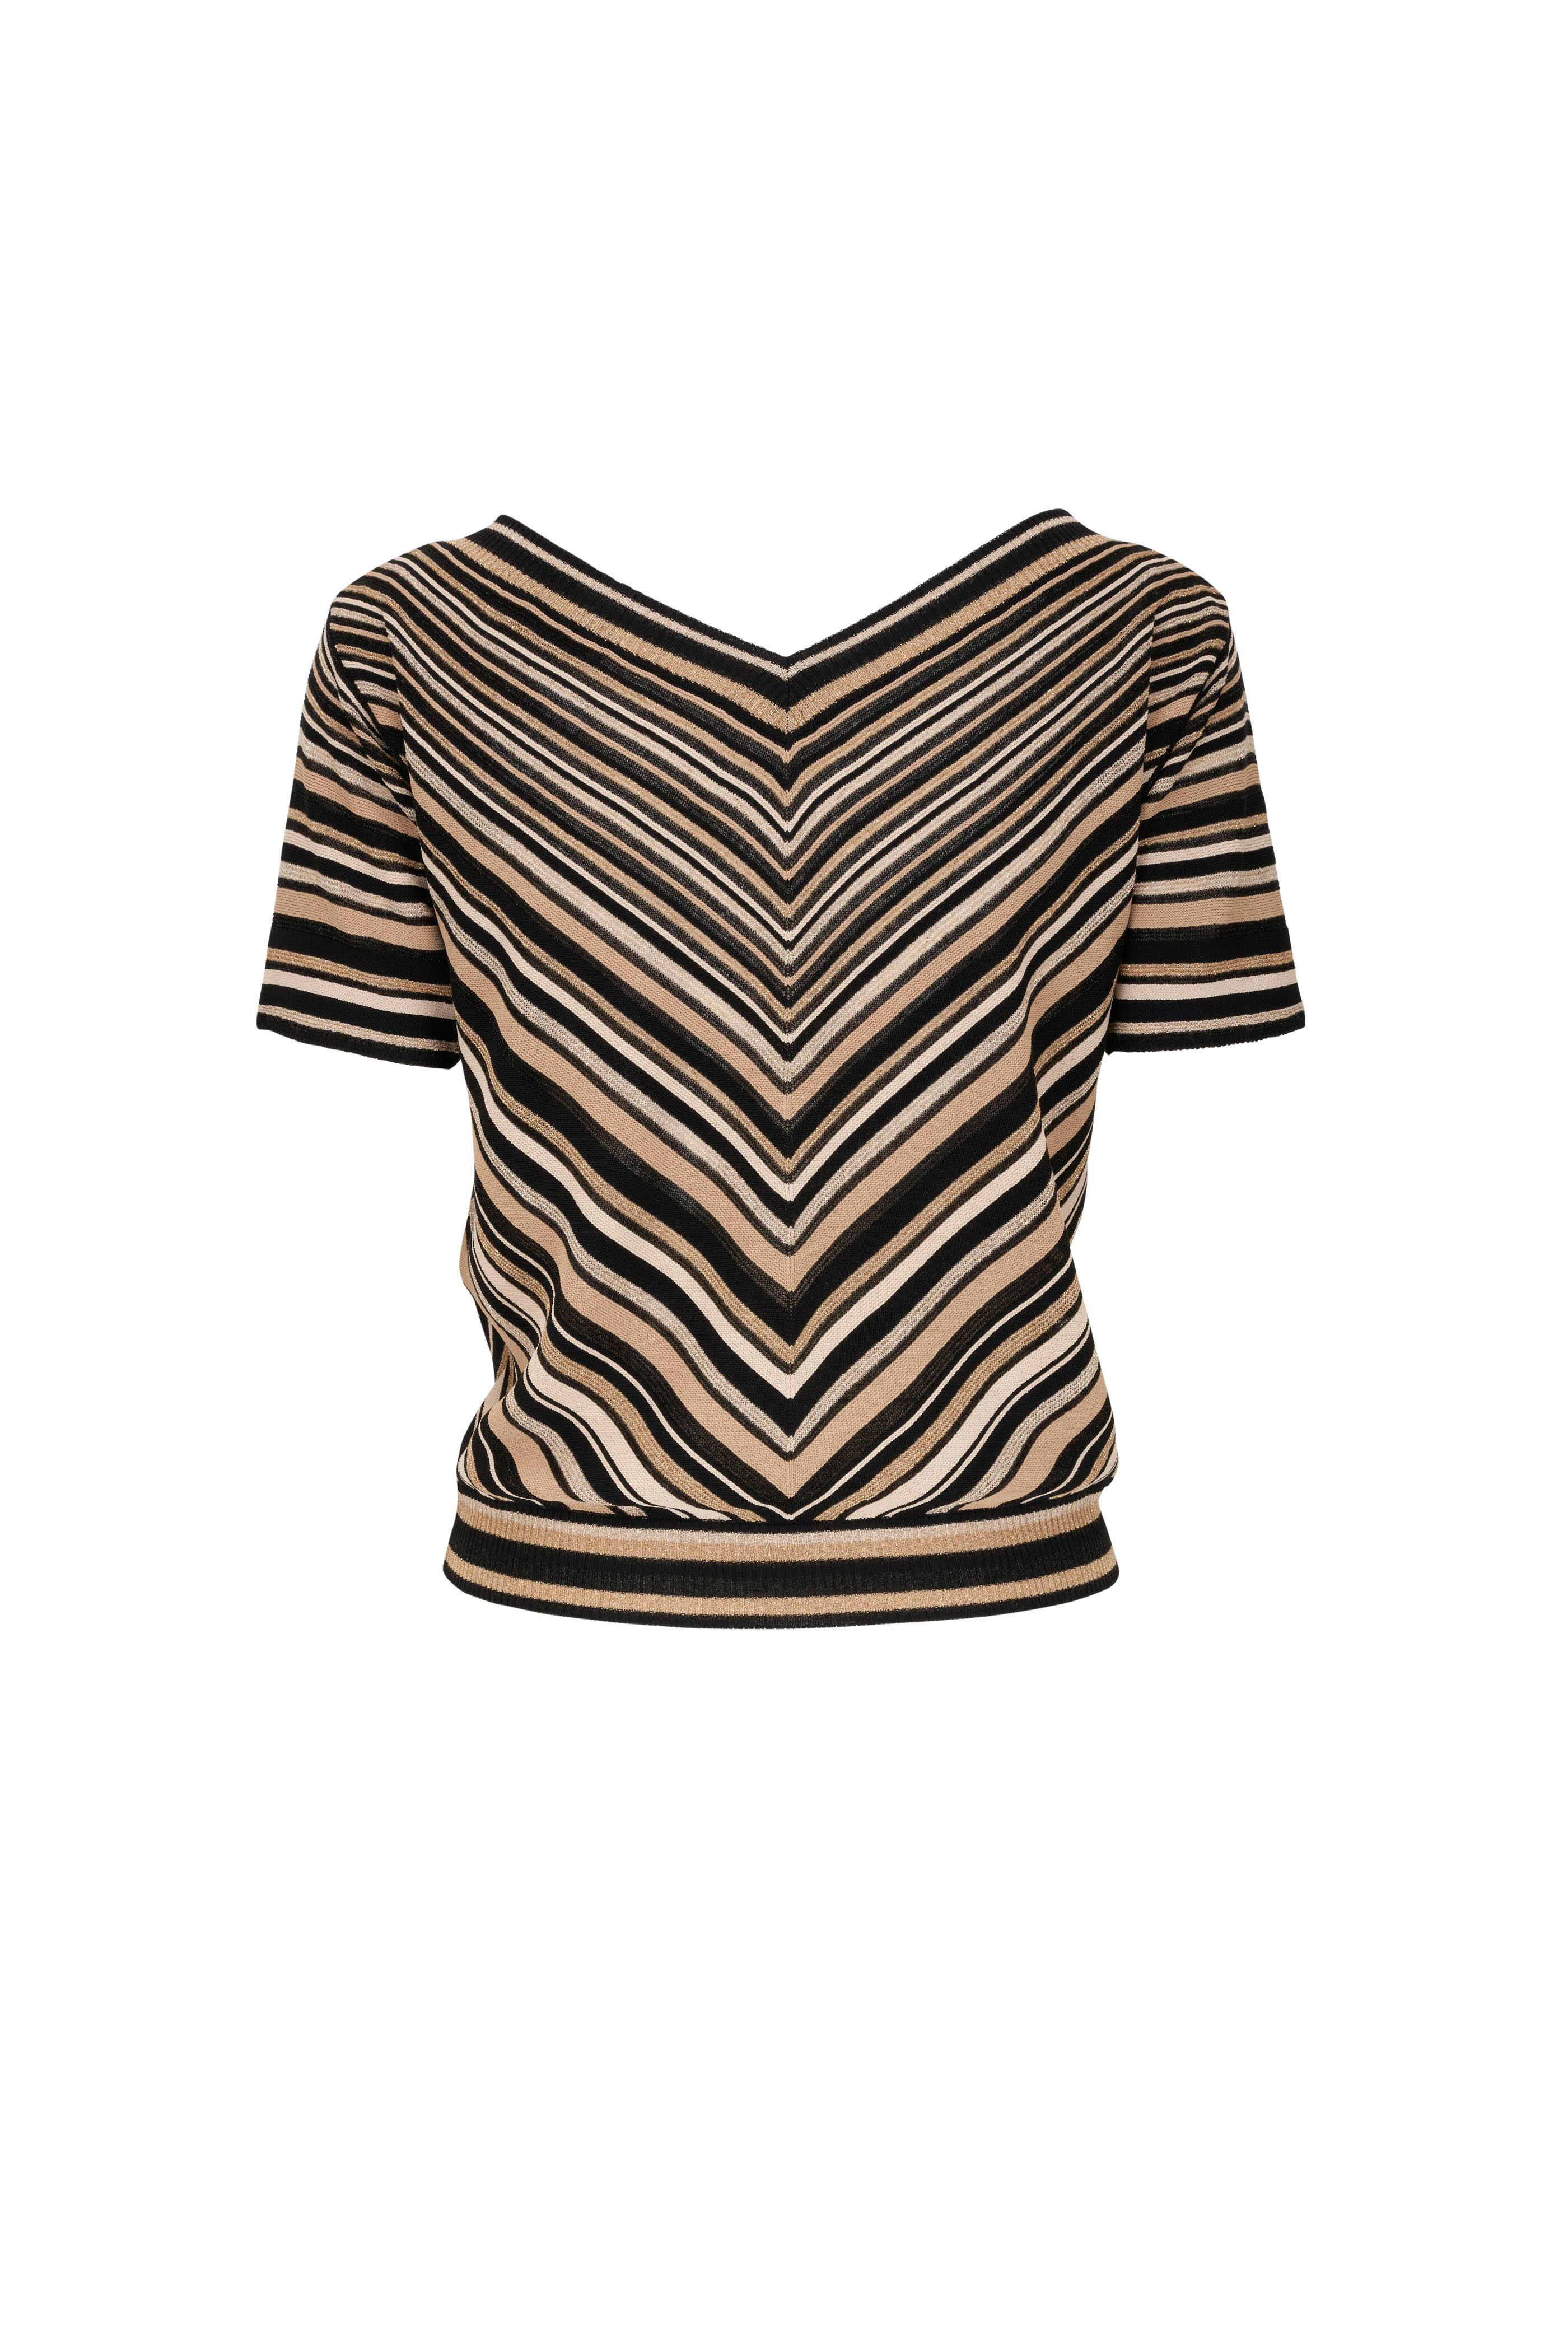 D.Exterior - Black & Striped Top Sleeve Lurex Knit Gold Short